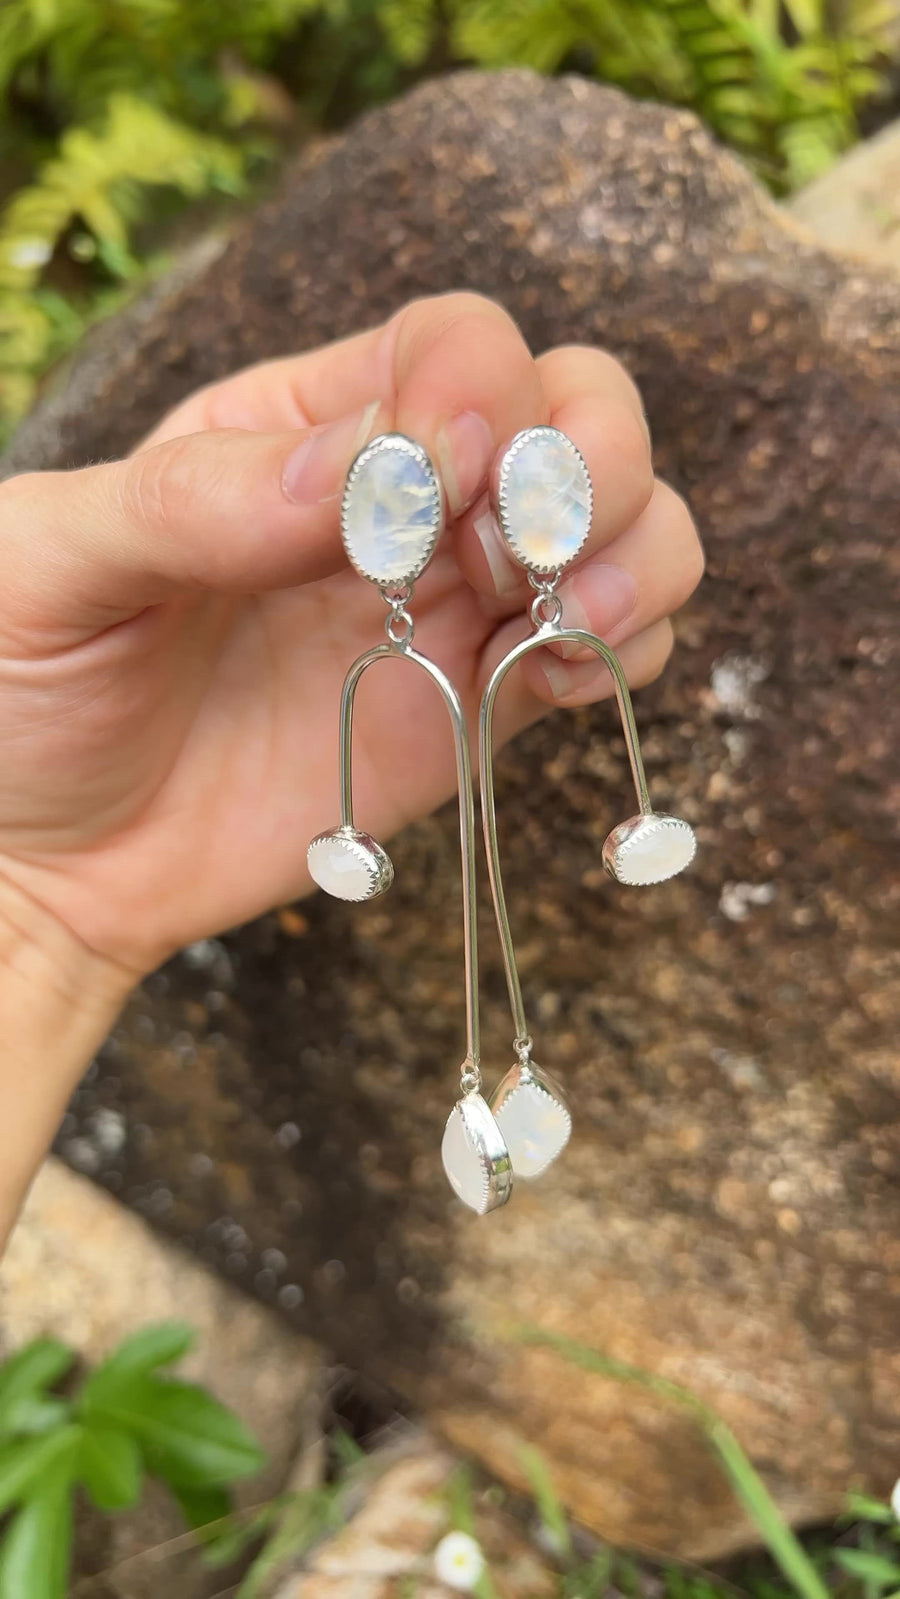 Rainbow Moonstone transformation earrings